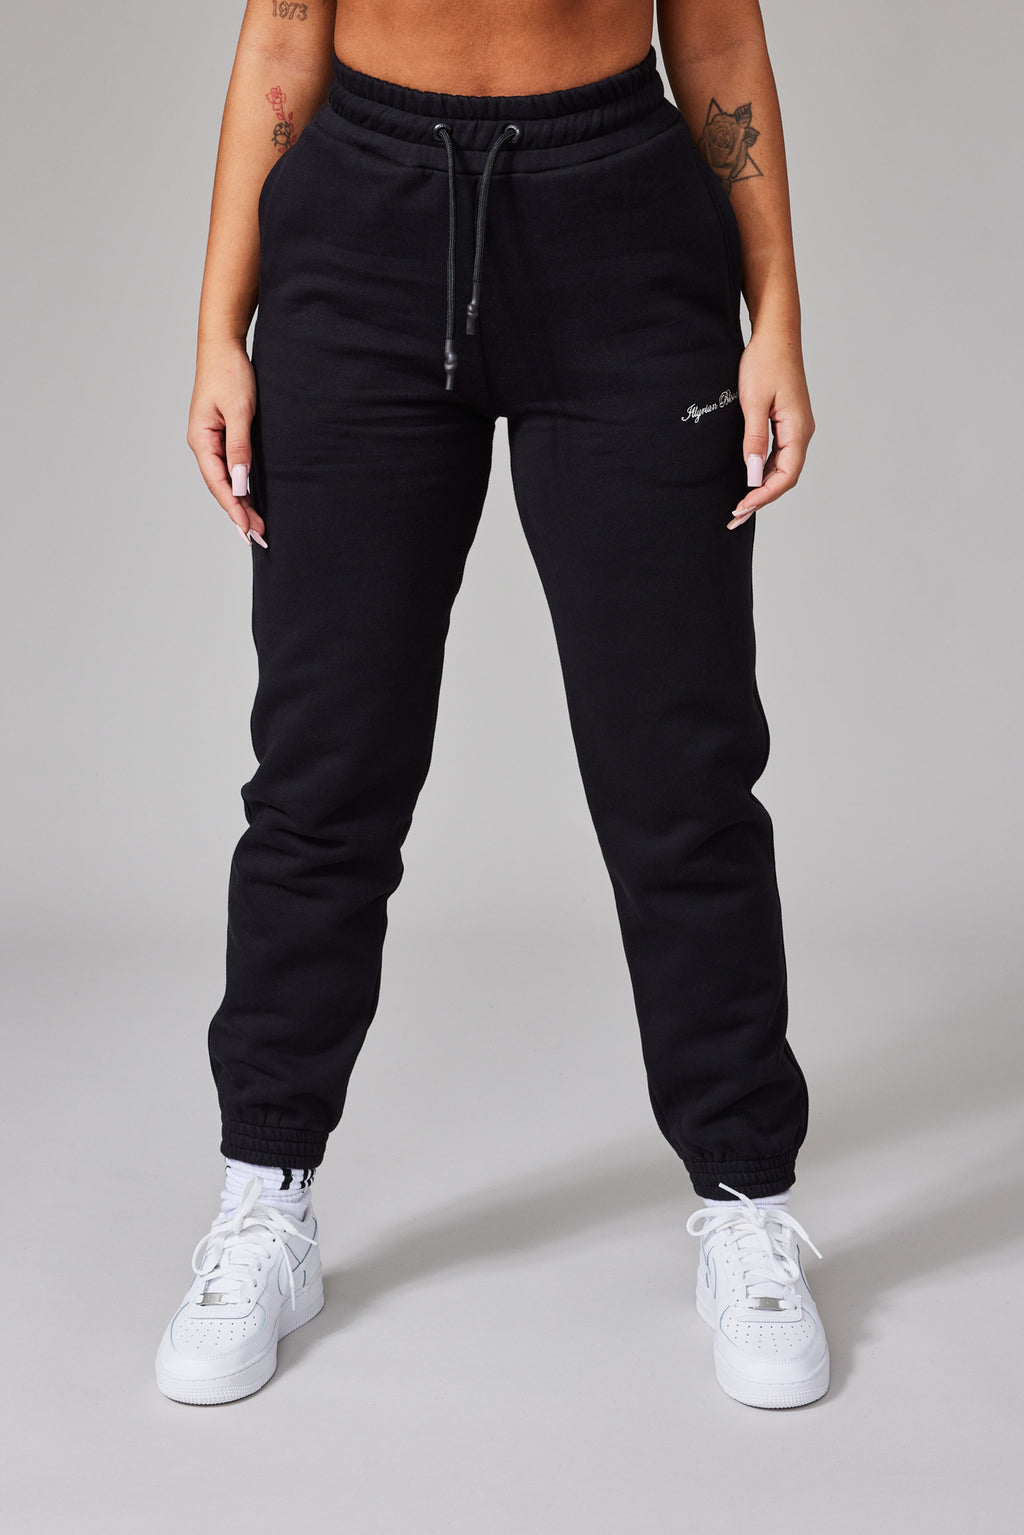 Sykooria Women's Jogging Bottoms Cotton Sports Summer Training Trousers  Black XL Sweatpants, Black, XL: Buy Online at Best Price in UAE 